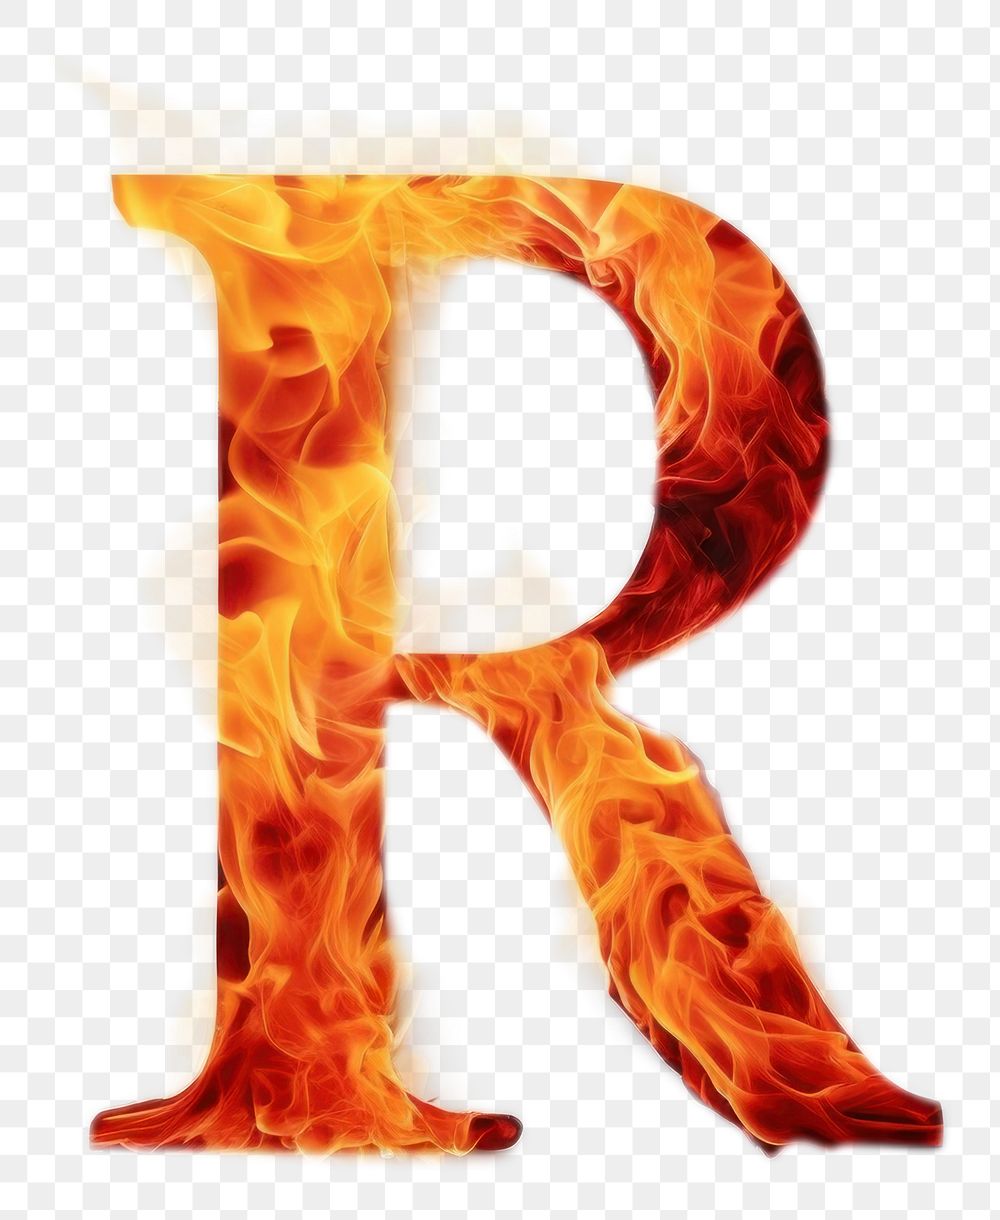 Burning letter R text fire alphabet